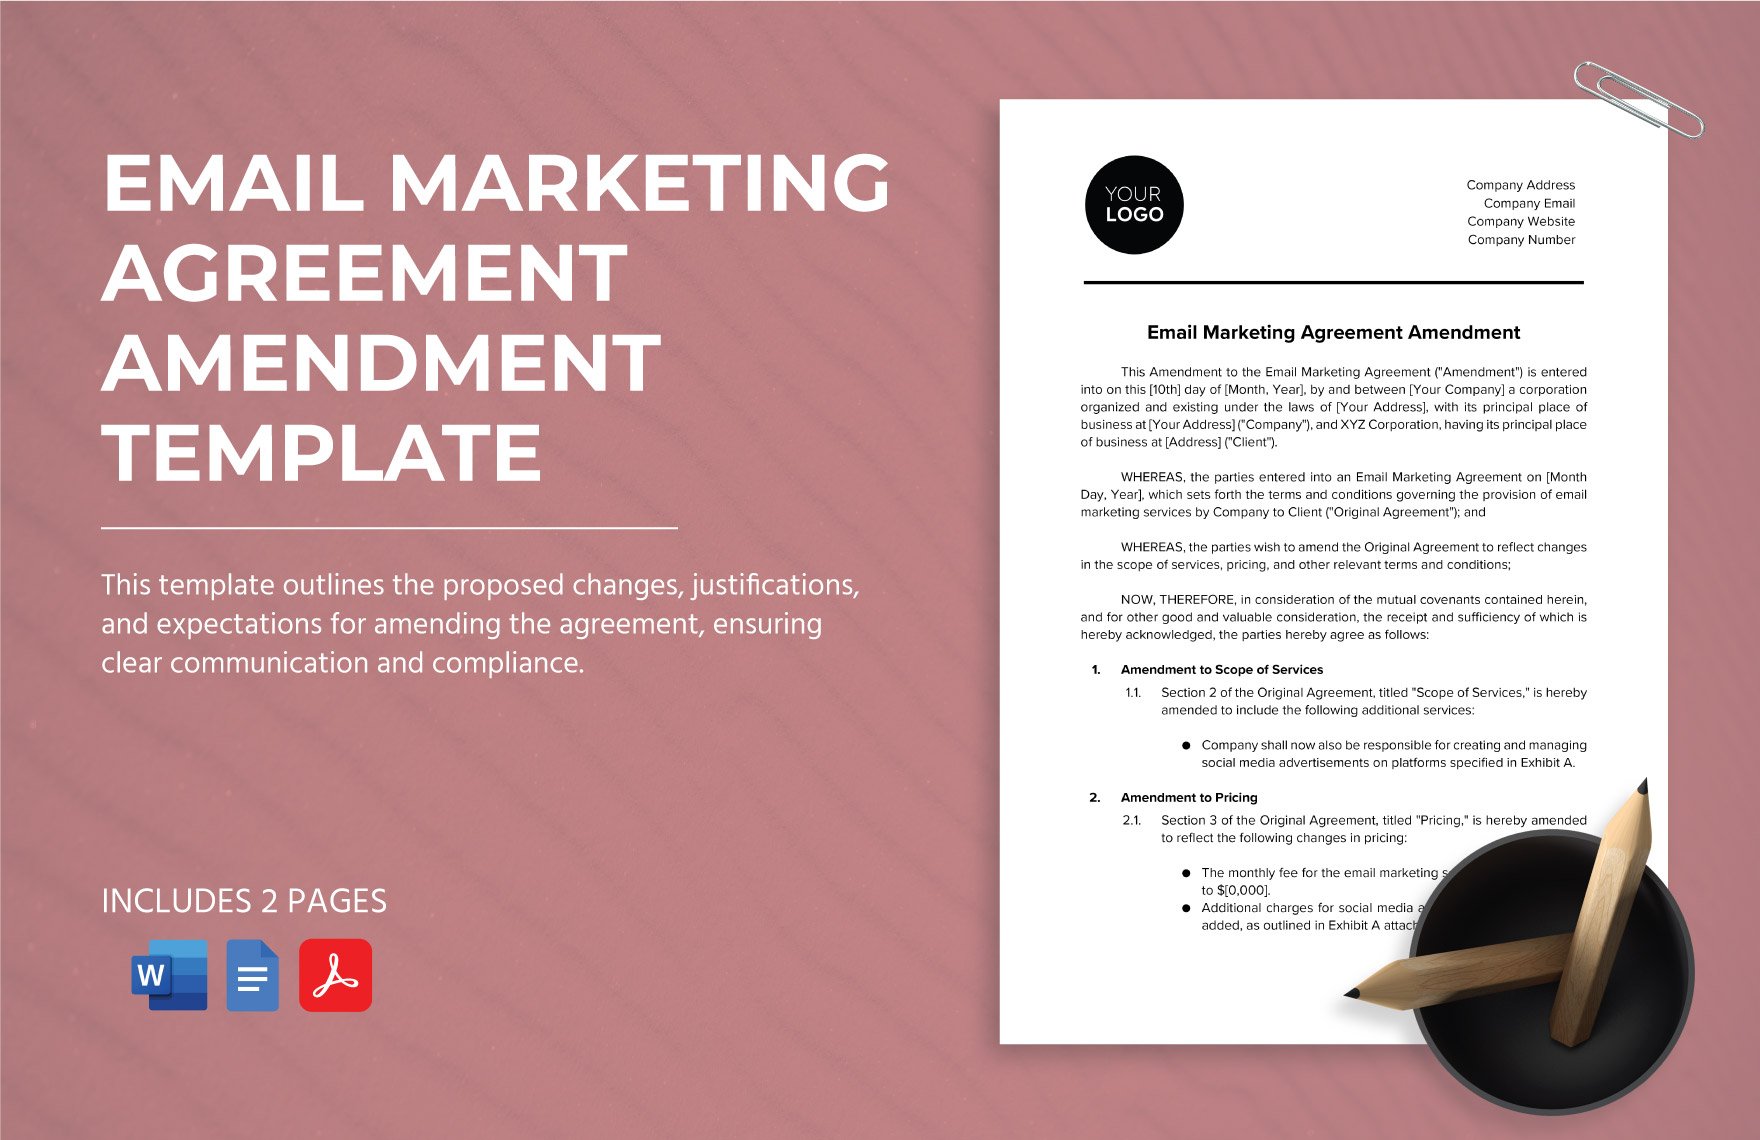 Email Marketing Agreement Amendment Template